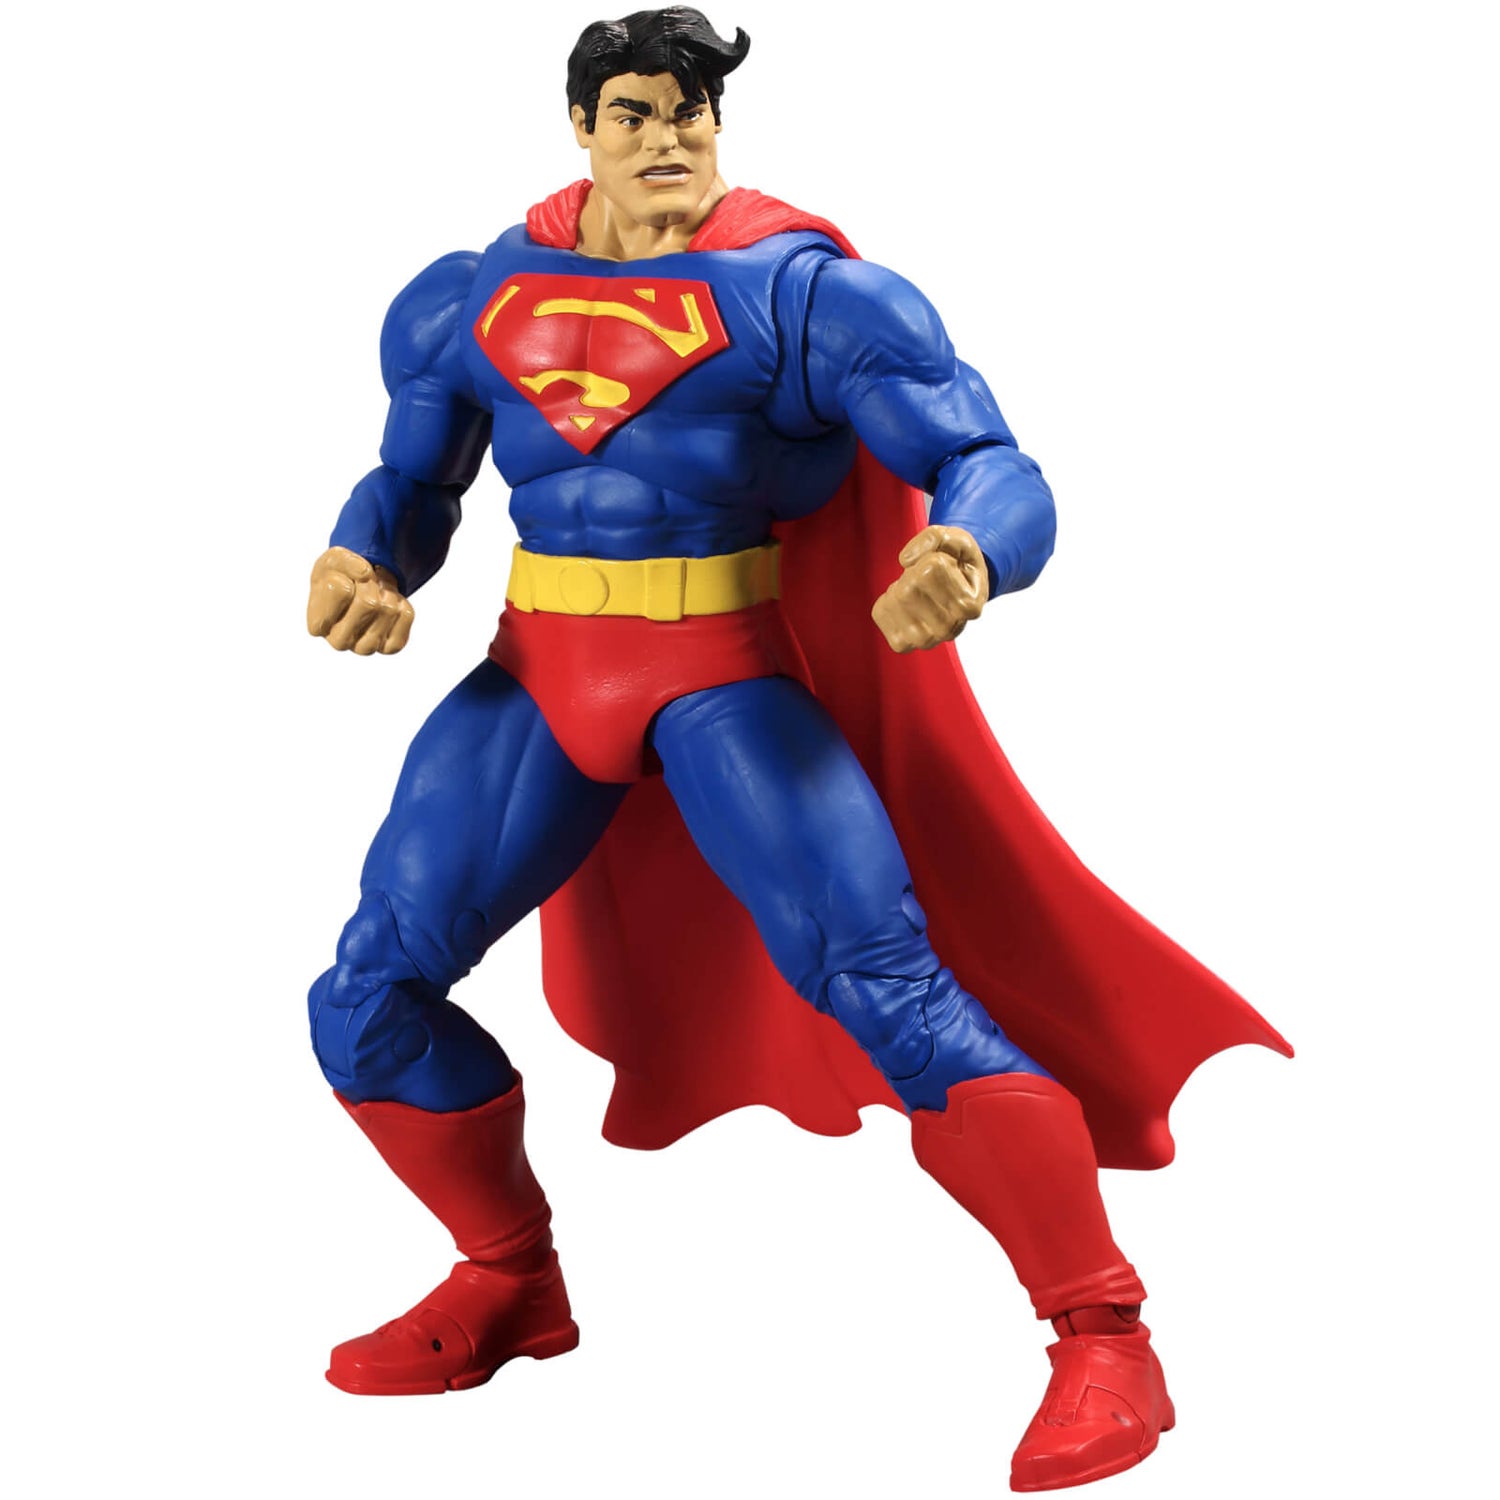 McFarlane DC Multiverse Build-A-Figure 7" Action Figure - Superman (The Dark Knight Returns)